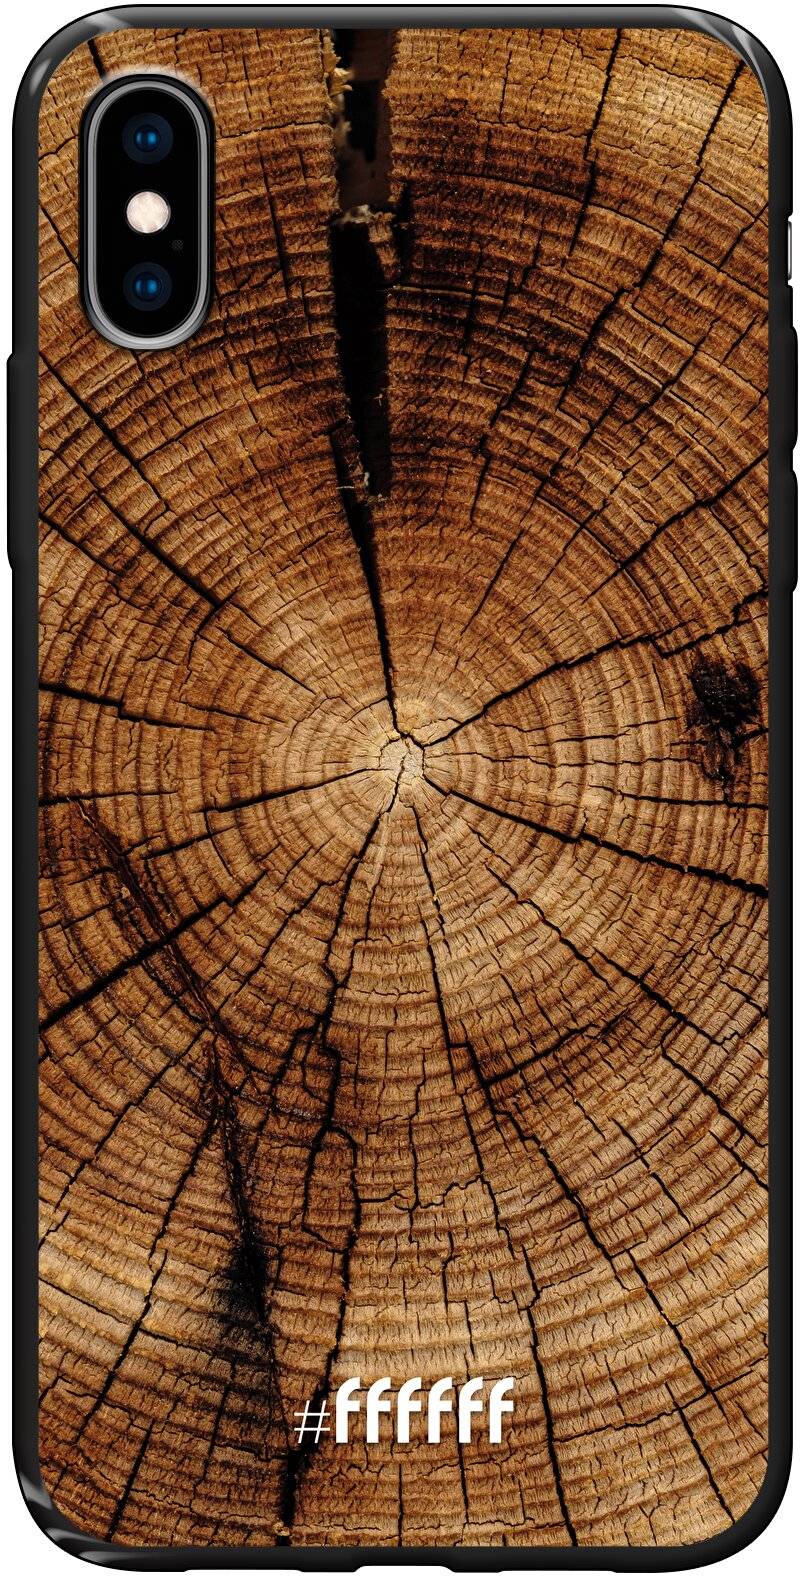 Tree Rings iPhone X